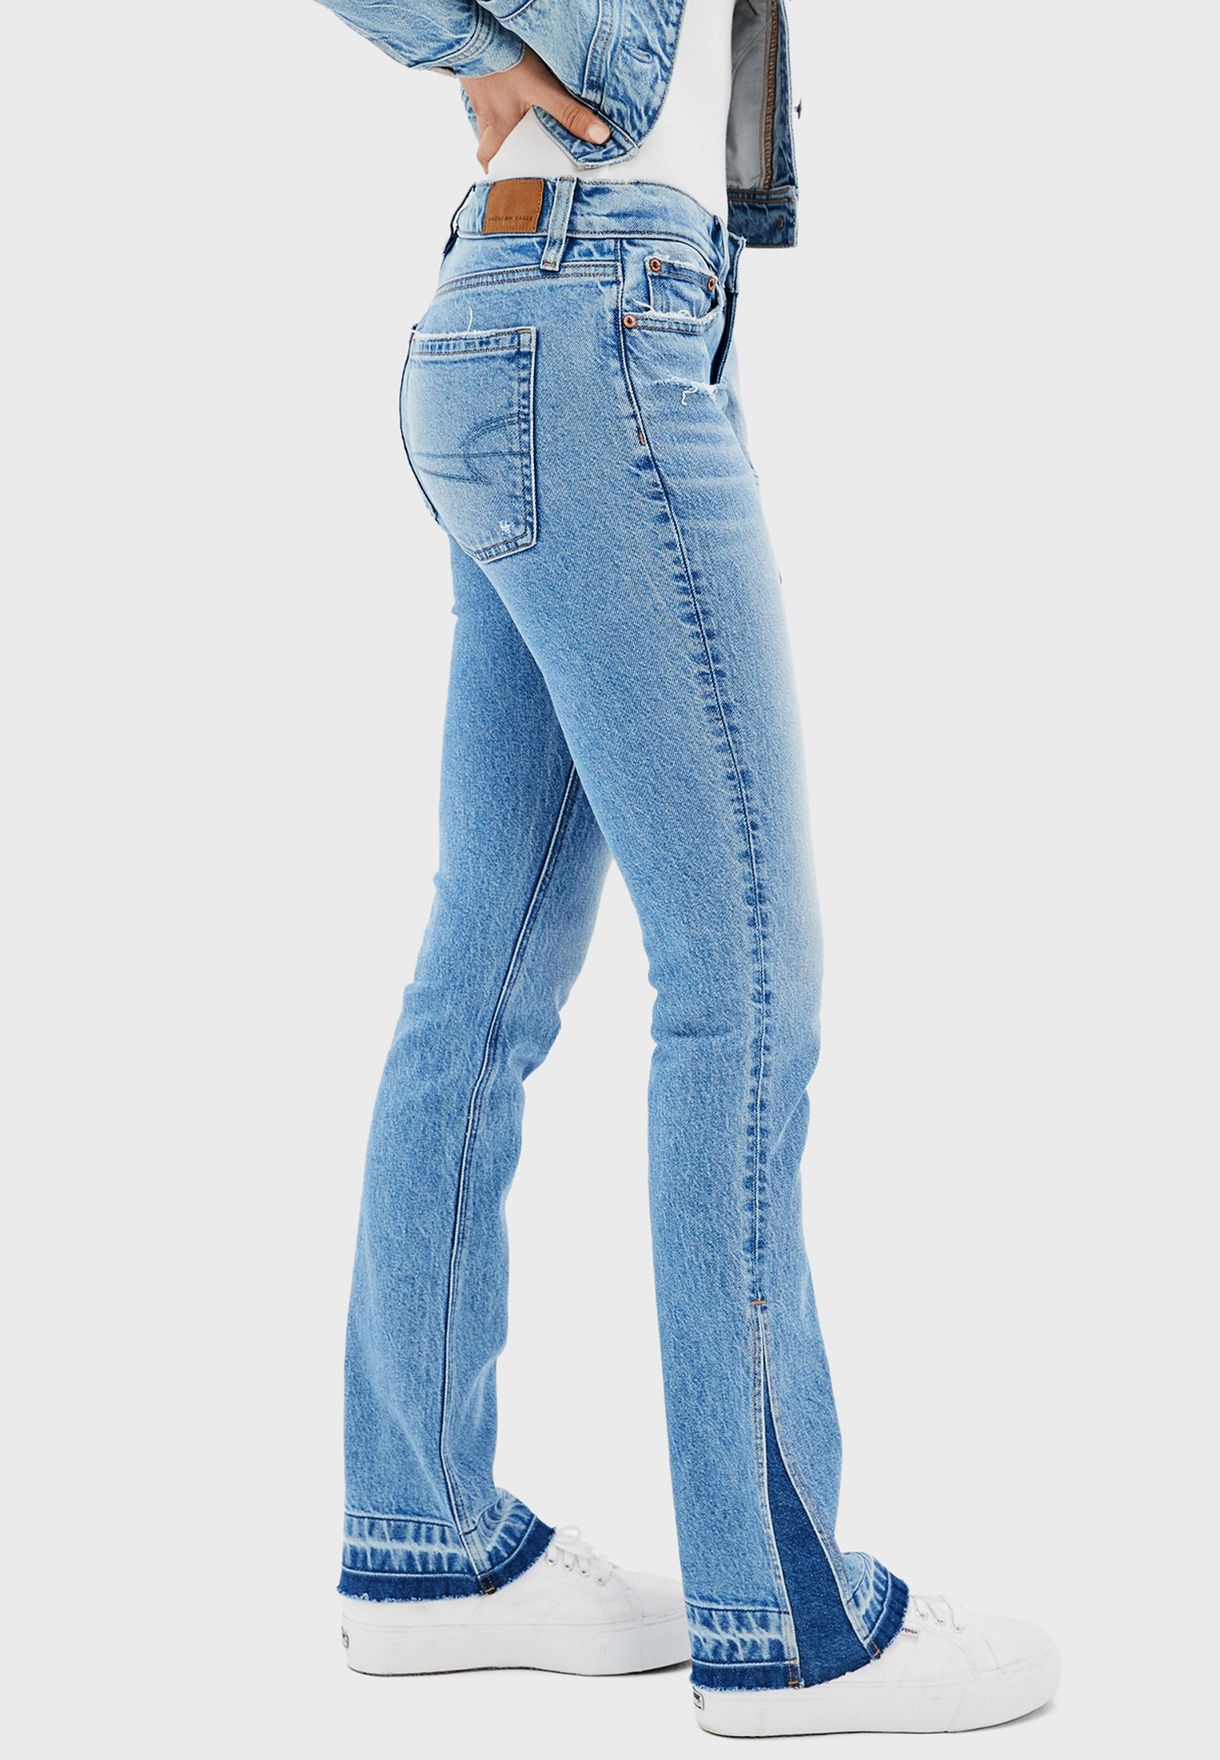 Flared Bottom Jeans